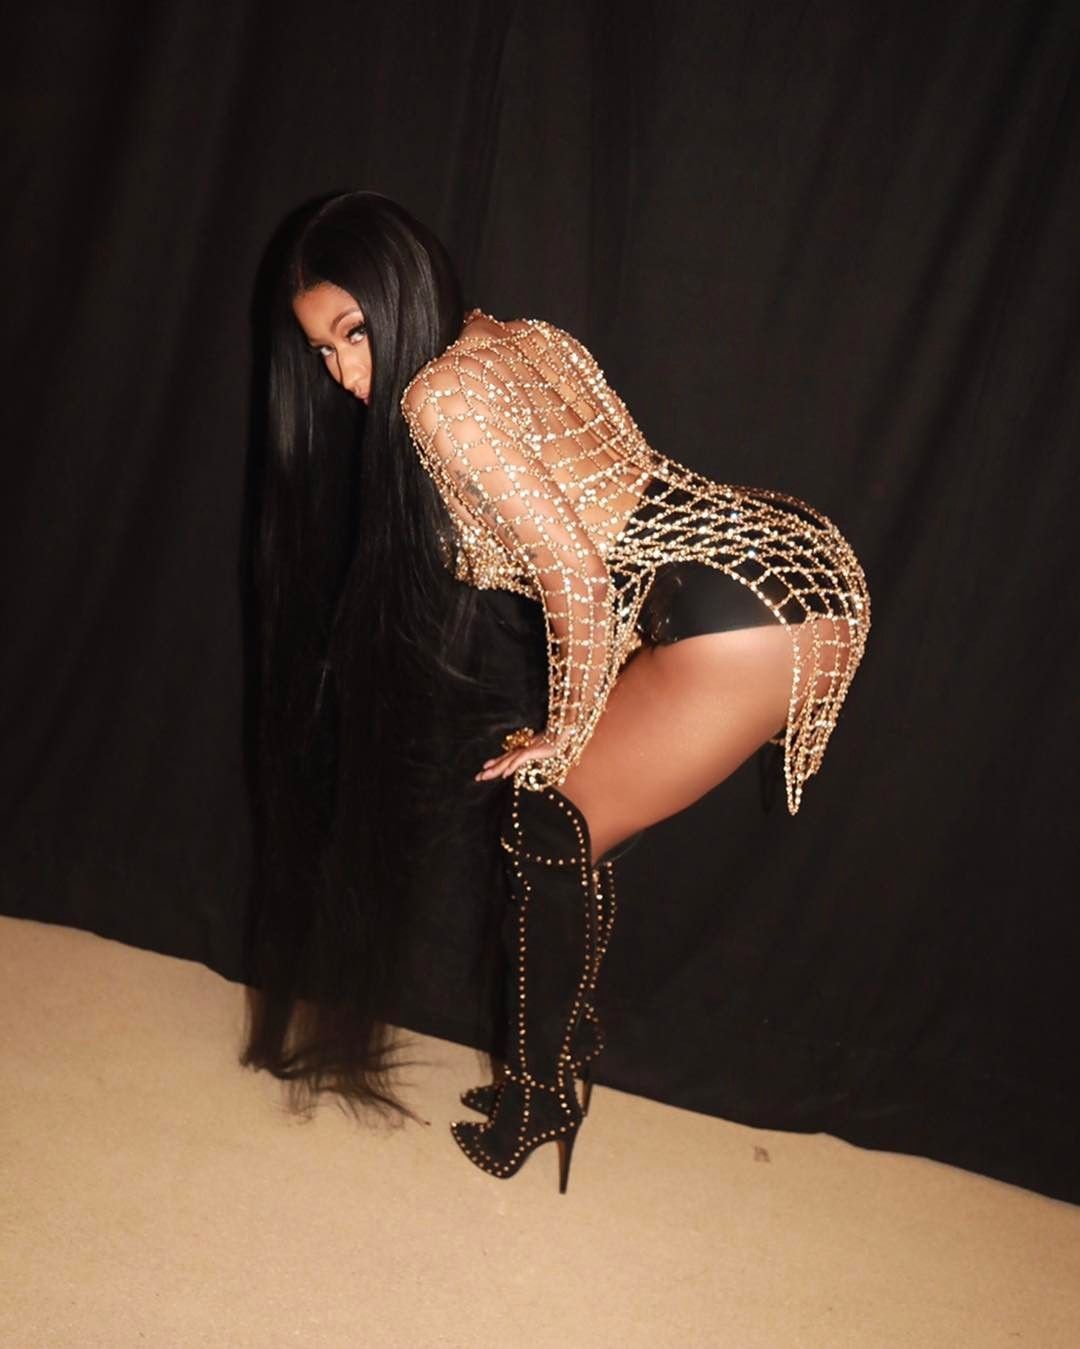 Nicki Minaj In Sexy Dress And Nude Scandal Planet